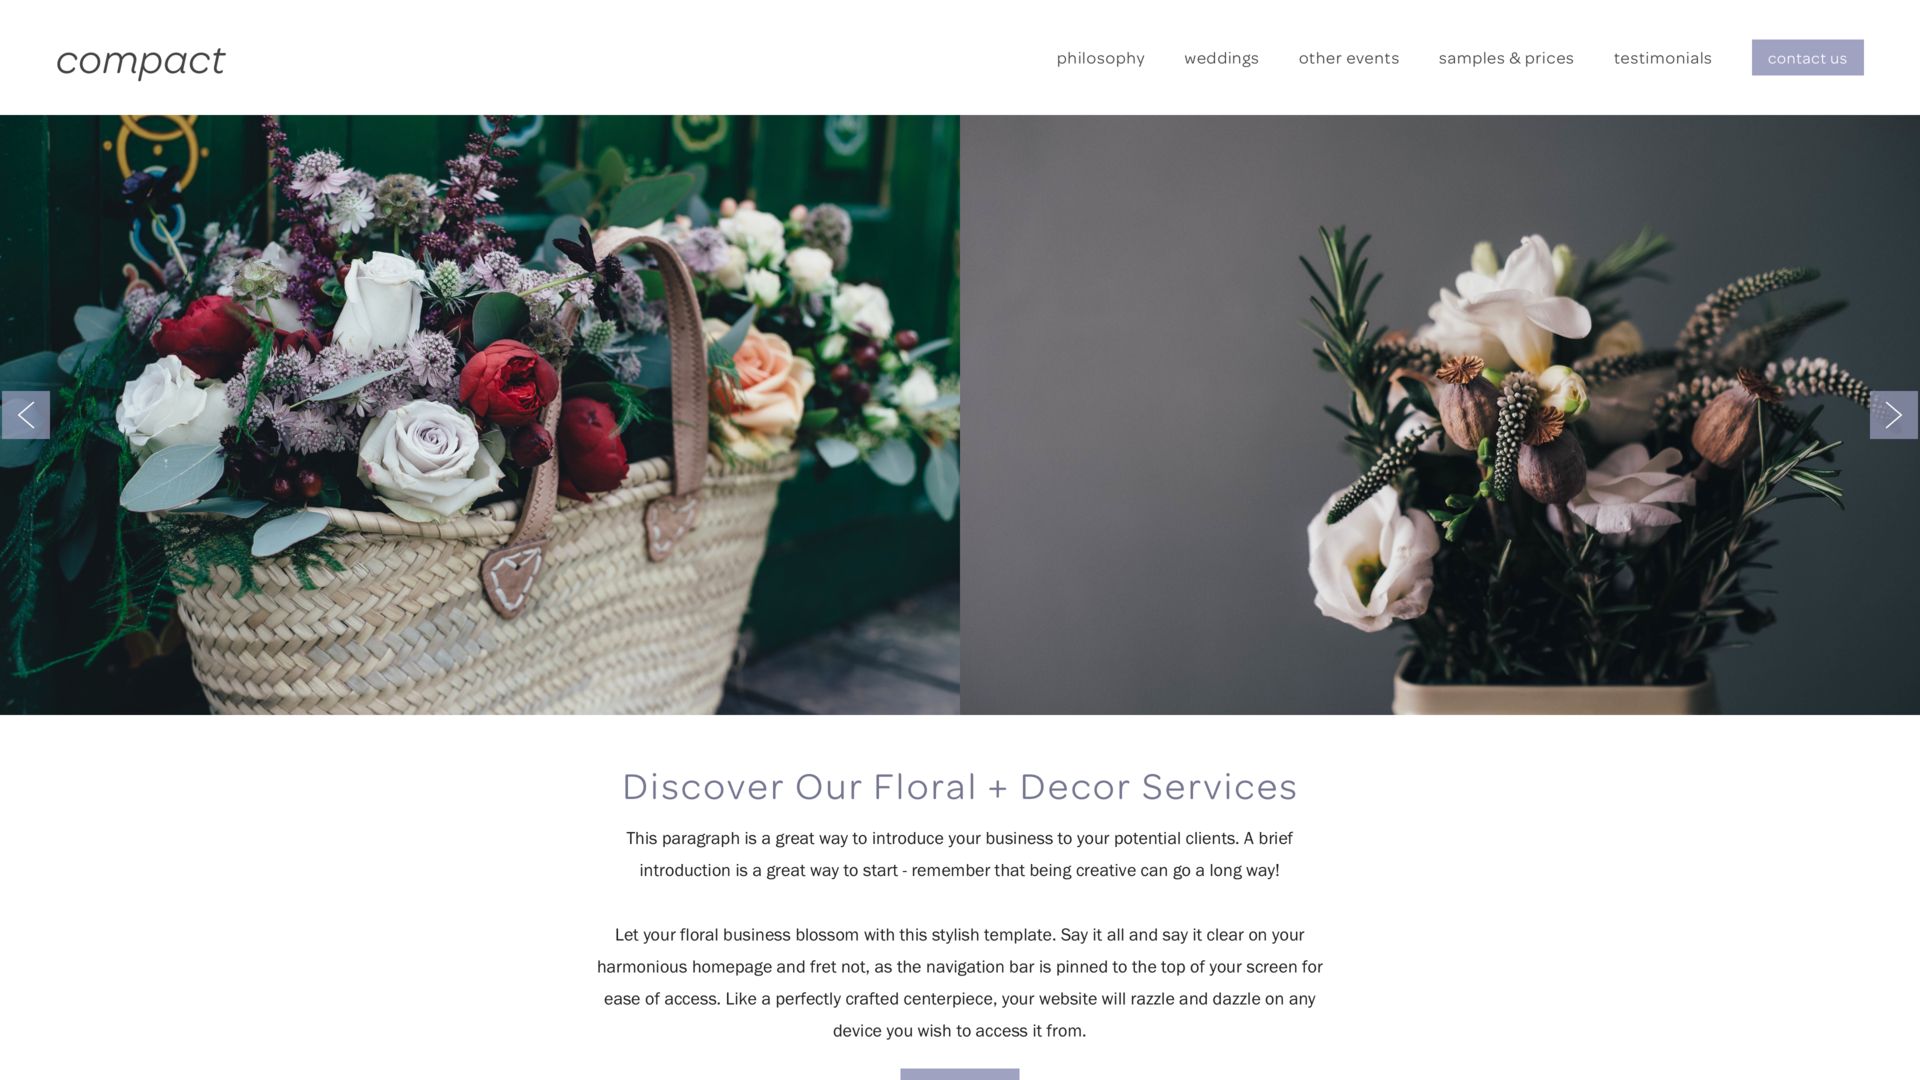 Create Your Own Wedding Website